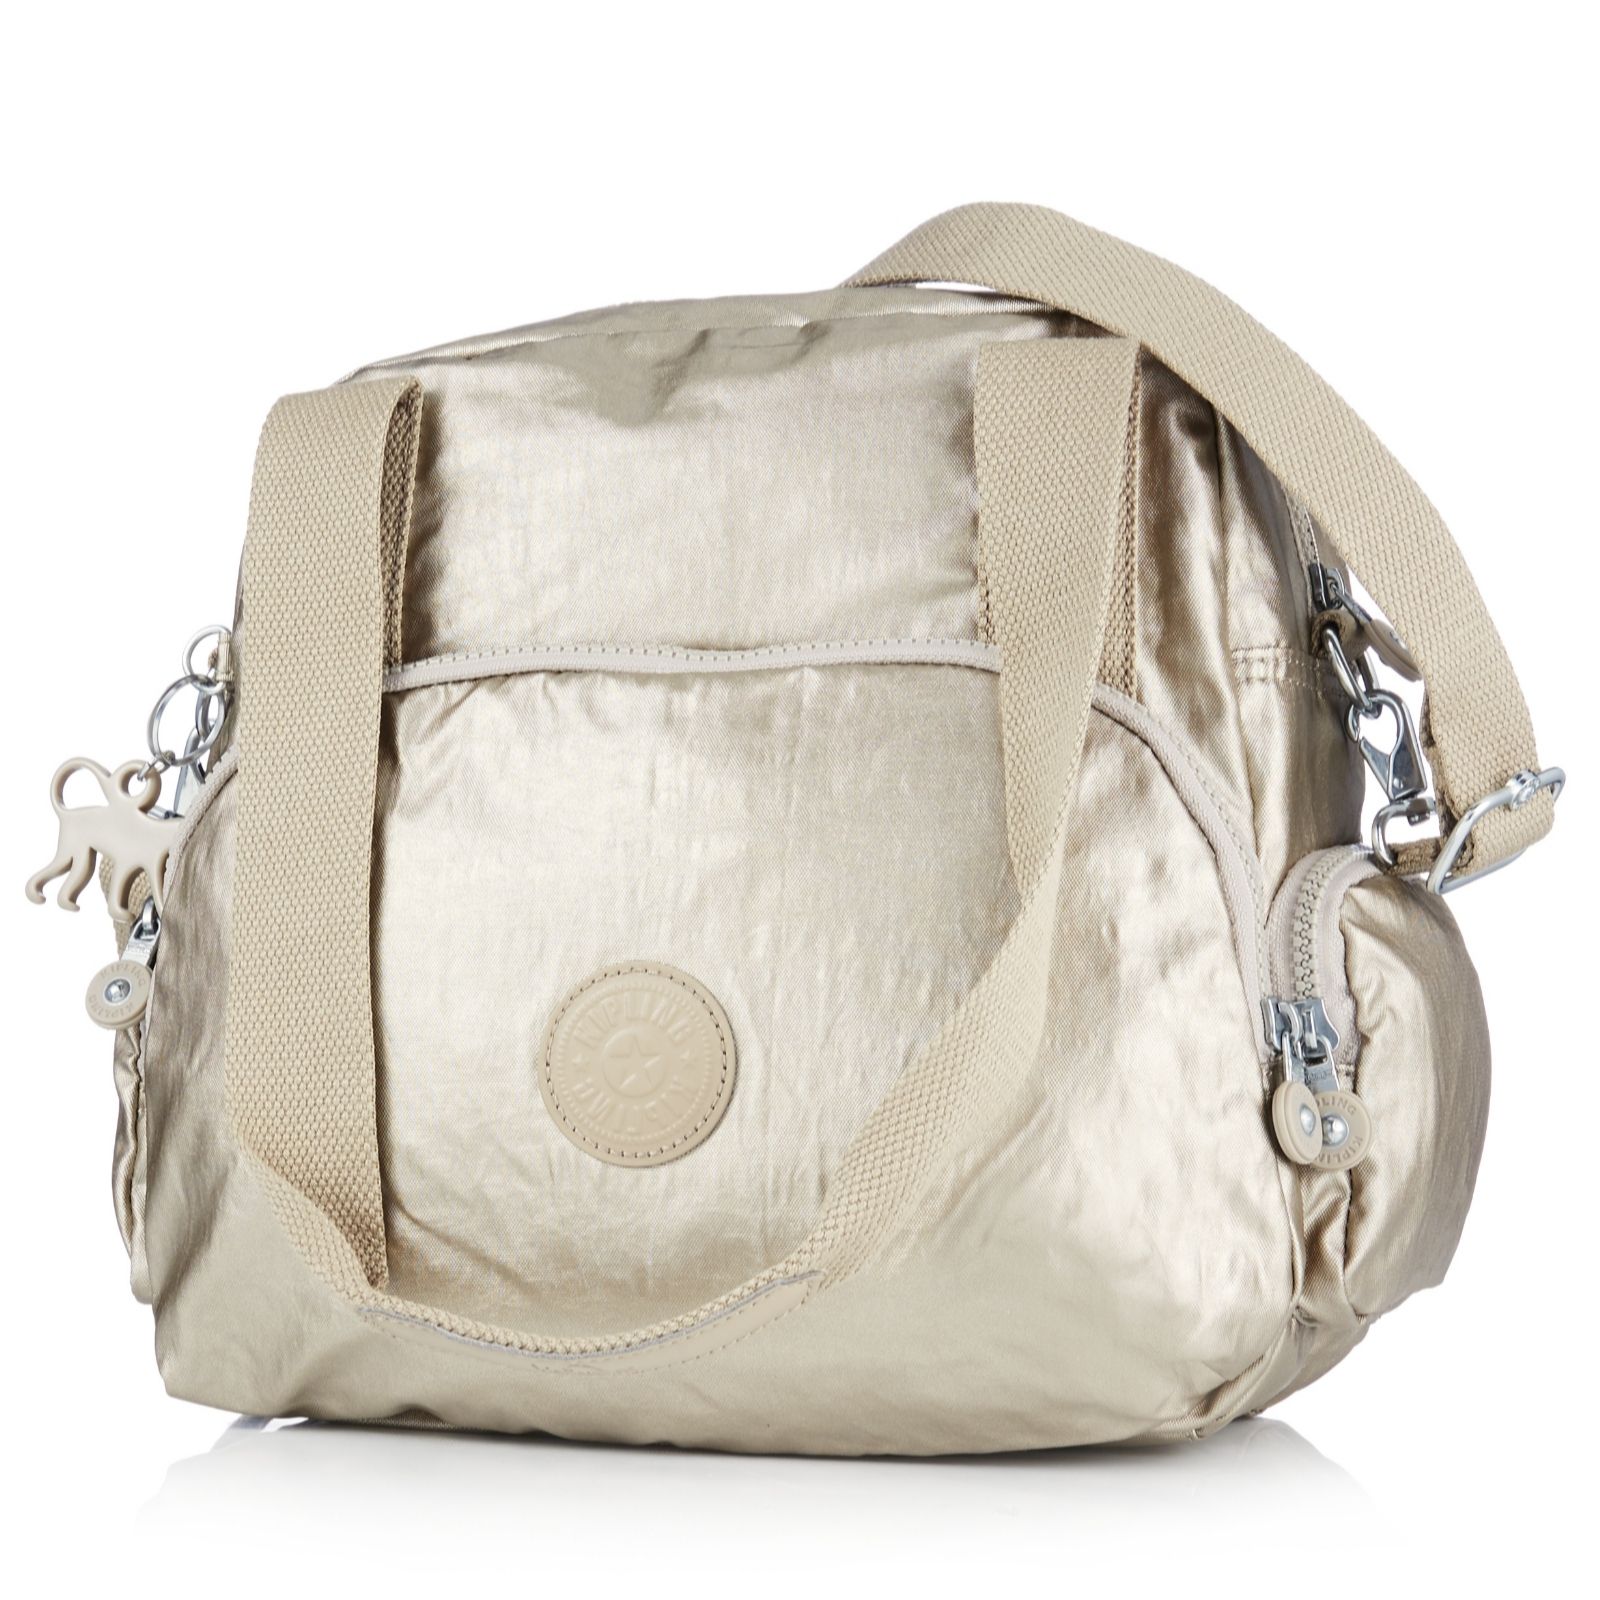 Kipling Aleksys Large Shoulder Bag with Double Handles - QVC UK